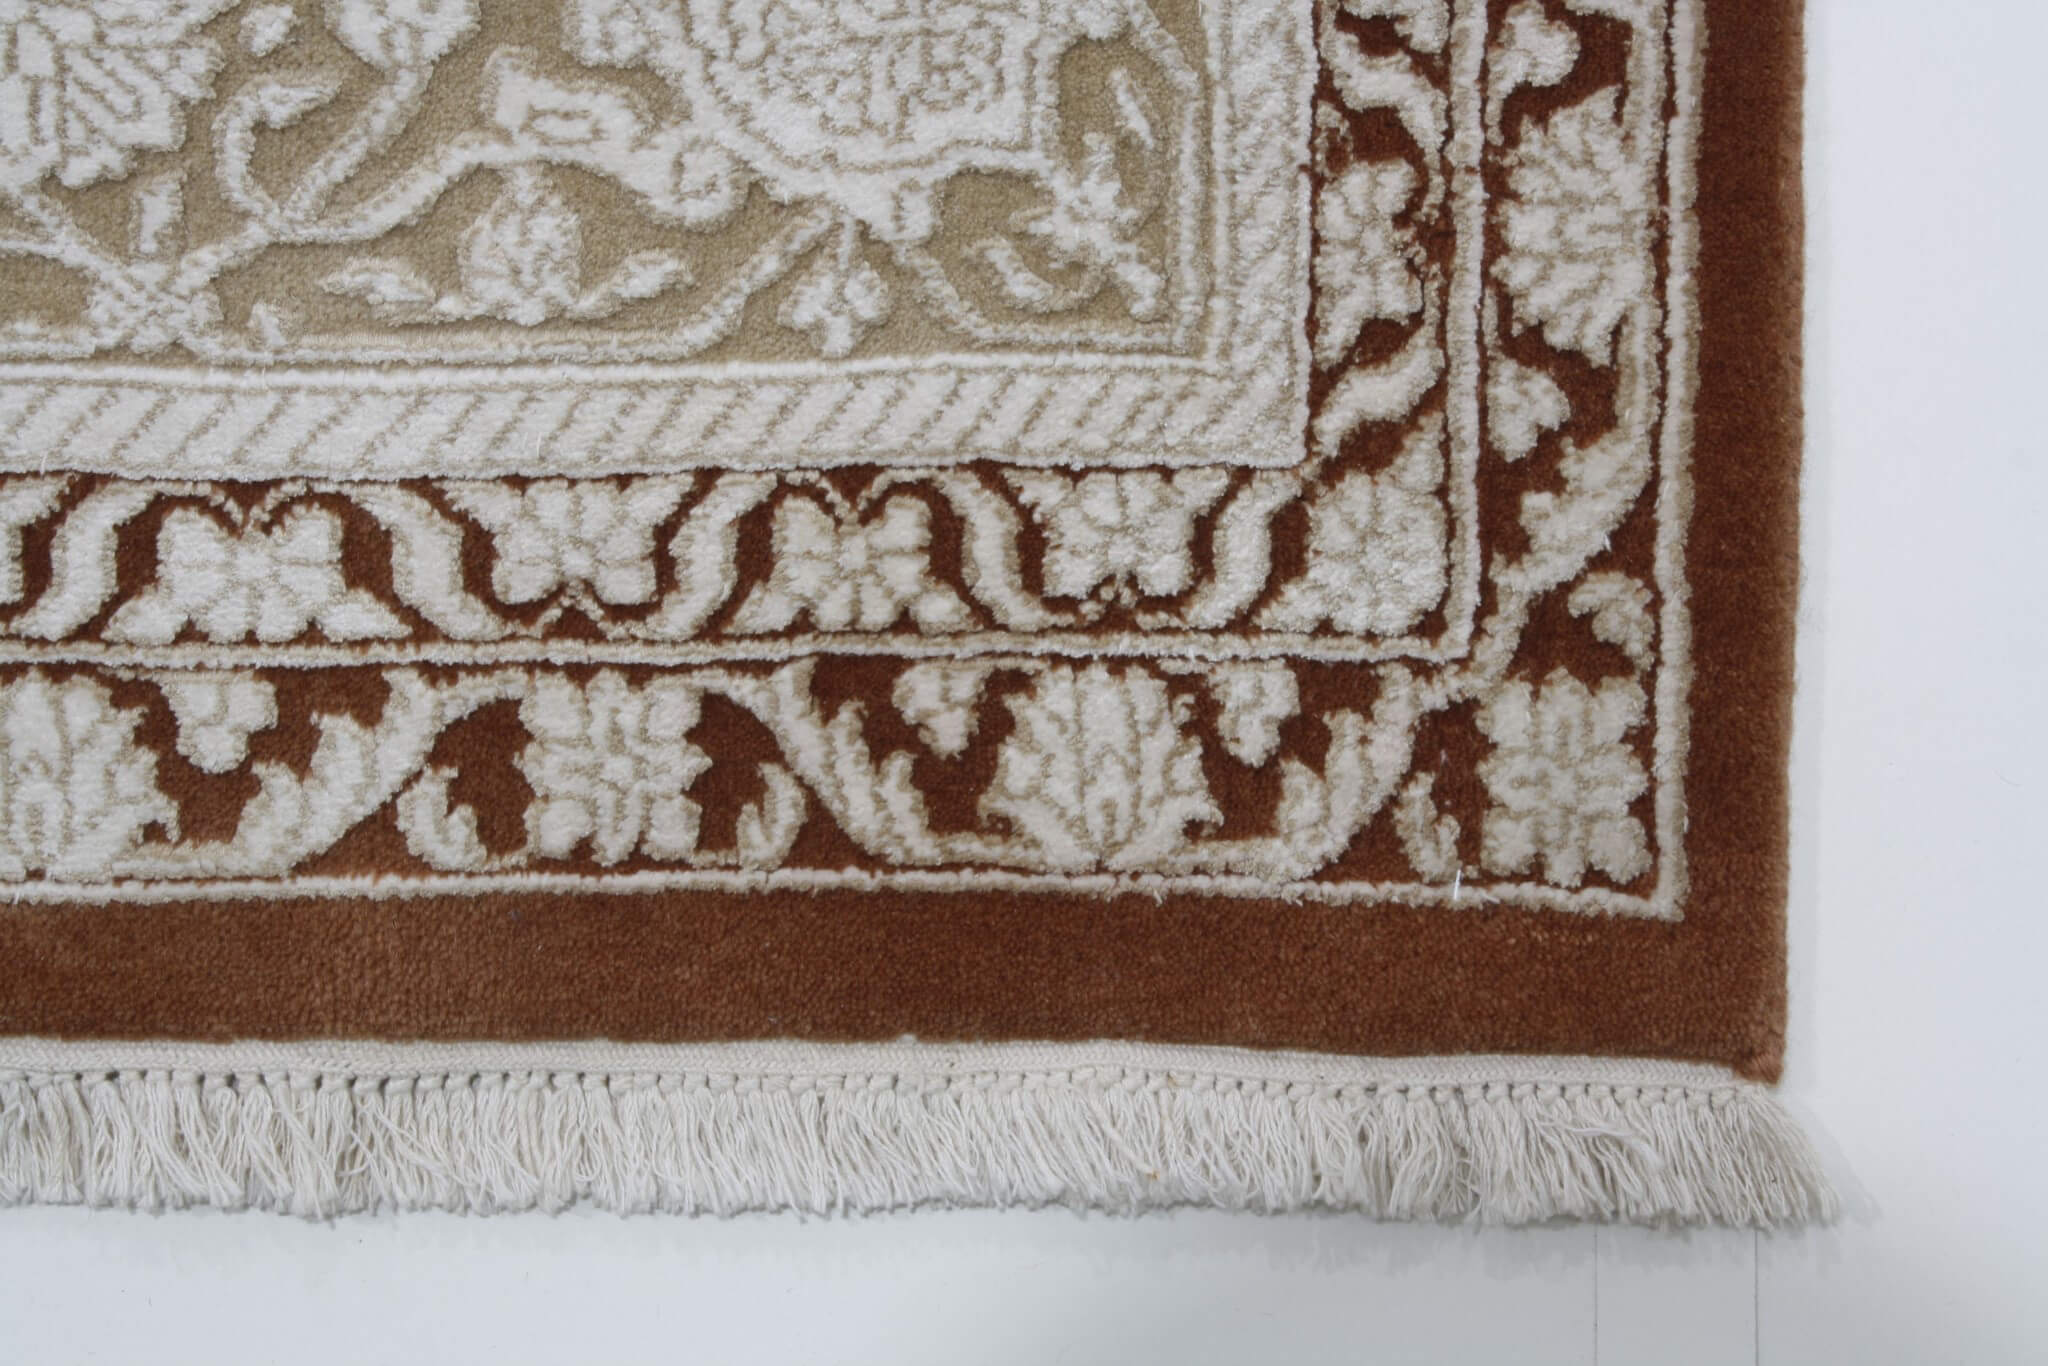 Perský koberec Tabriz Exclusive